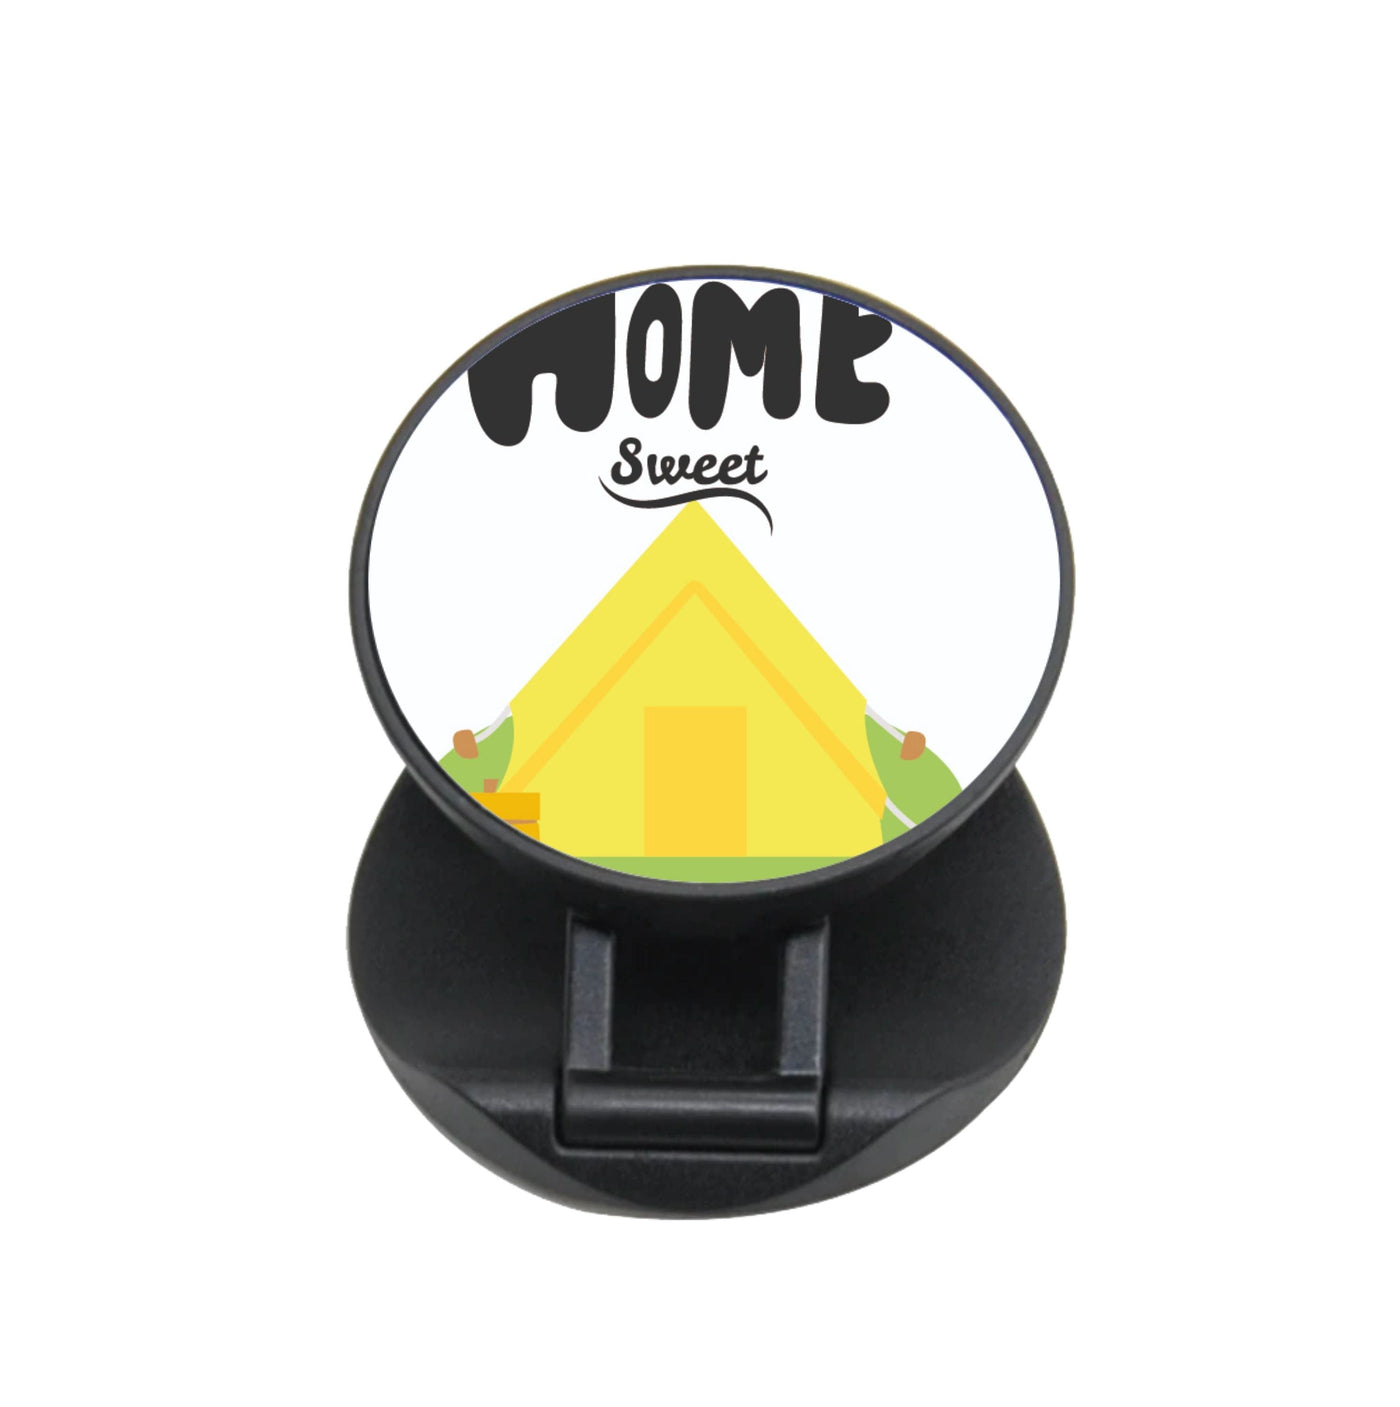 Home sweet home - Animal Crossing FunGrip